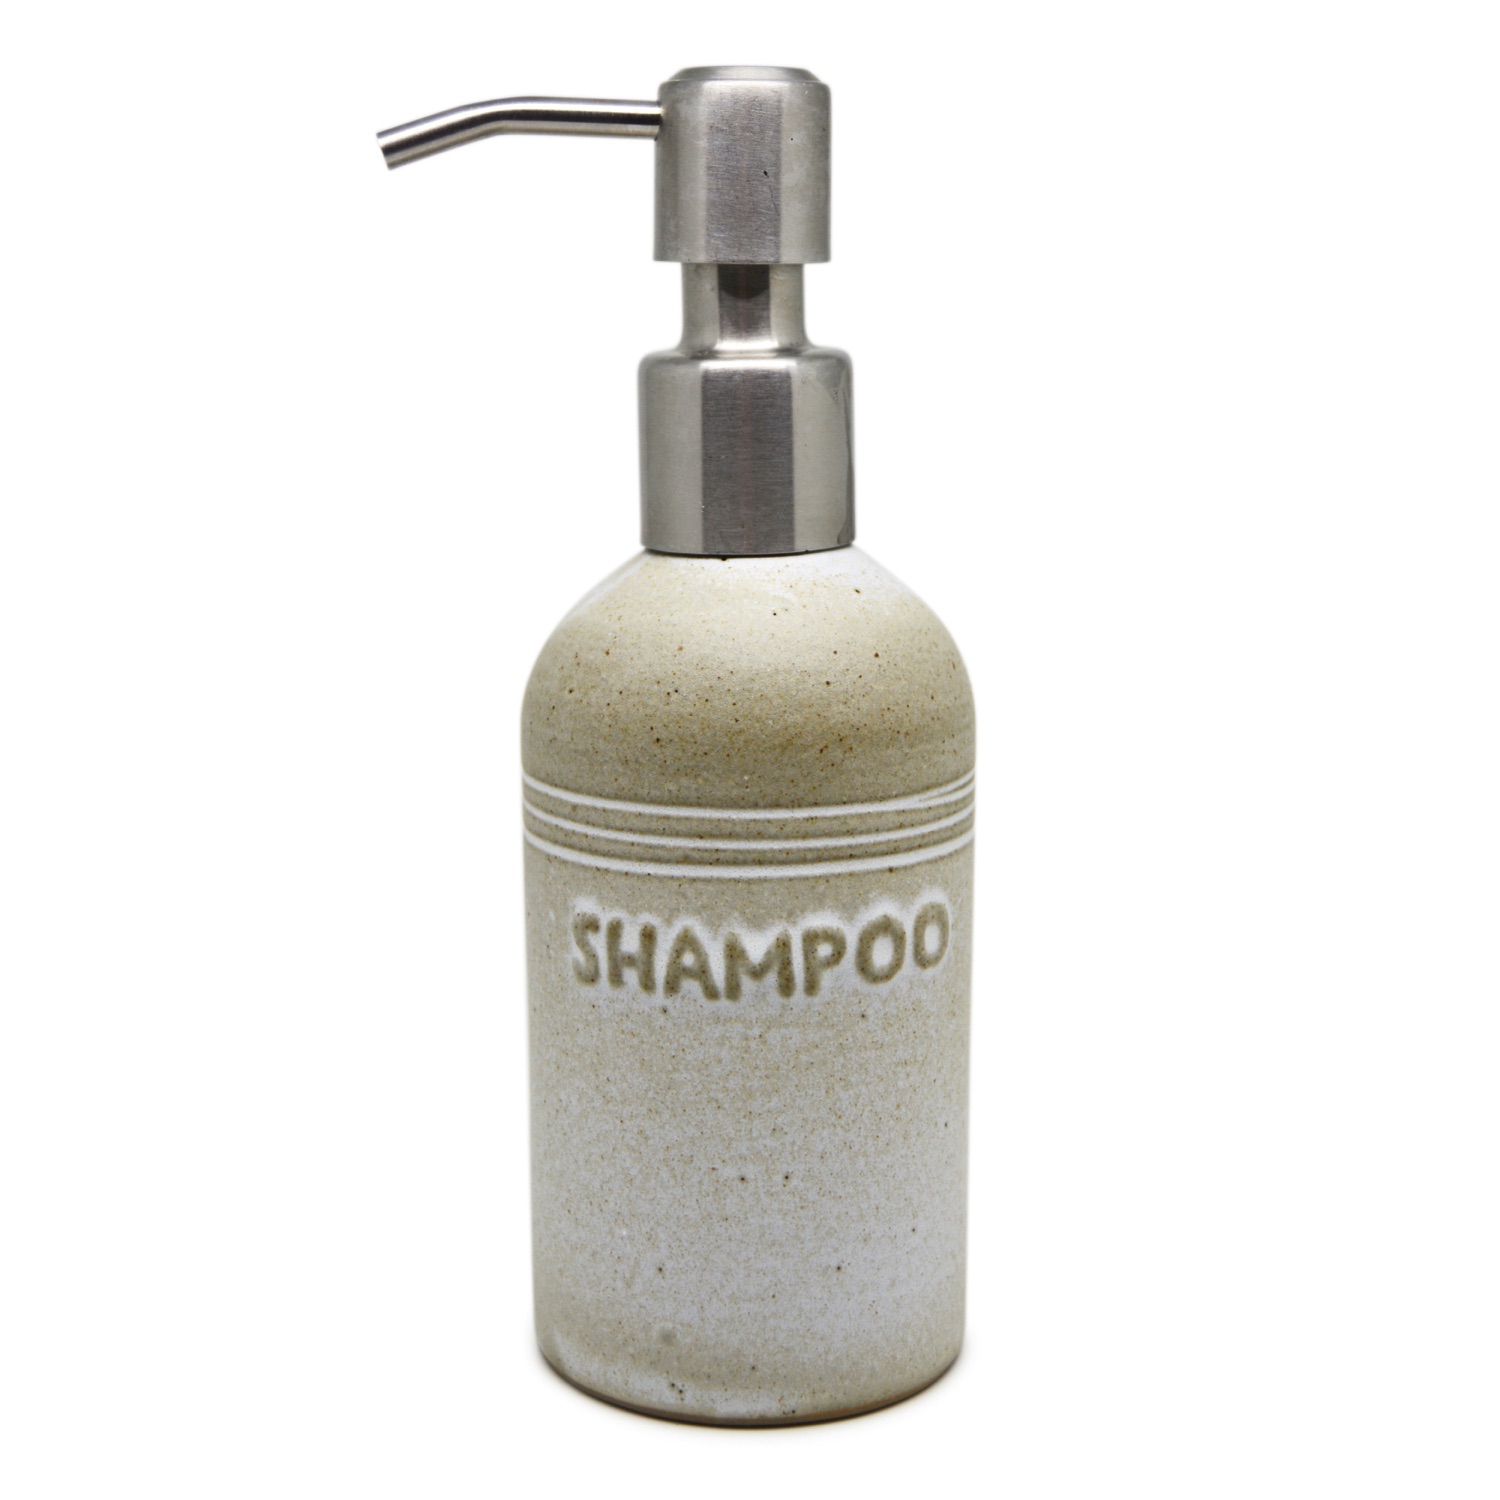 Liquid Dispenser S3 - Shampoo - Stainless Steel Pump